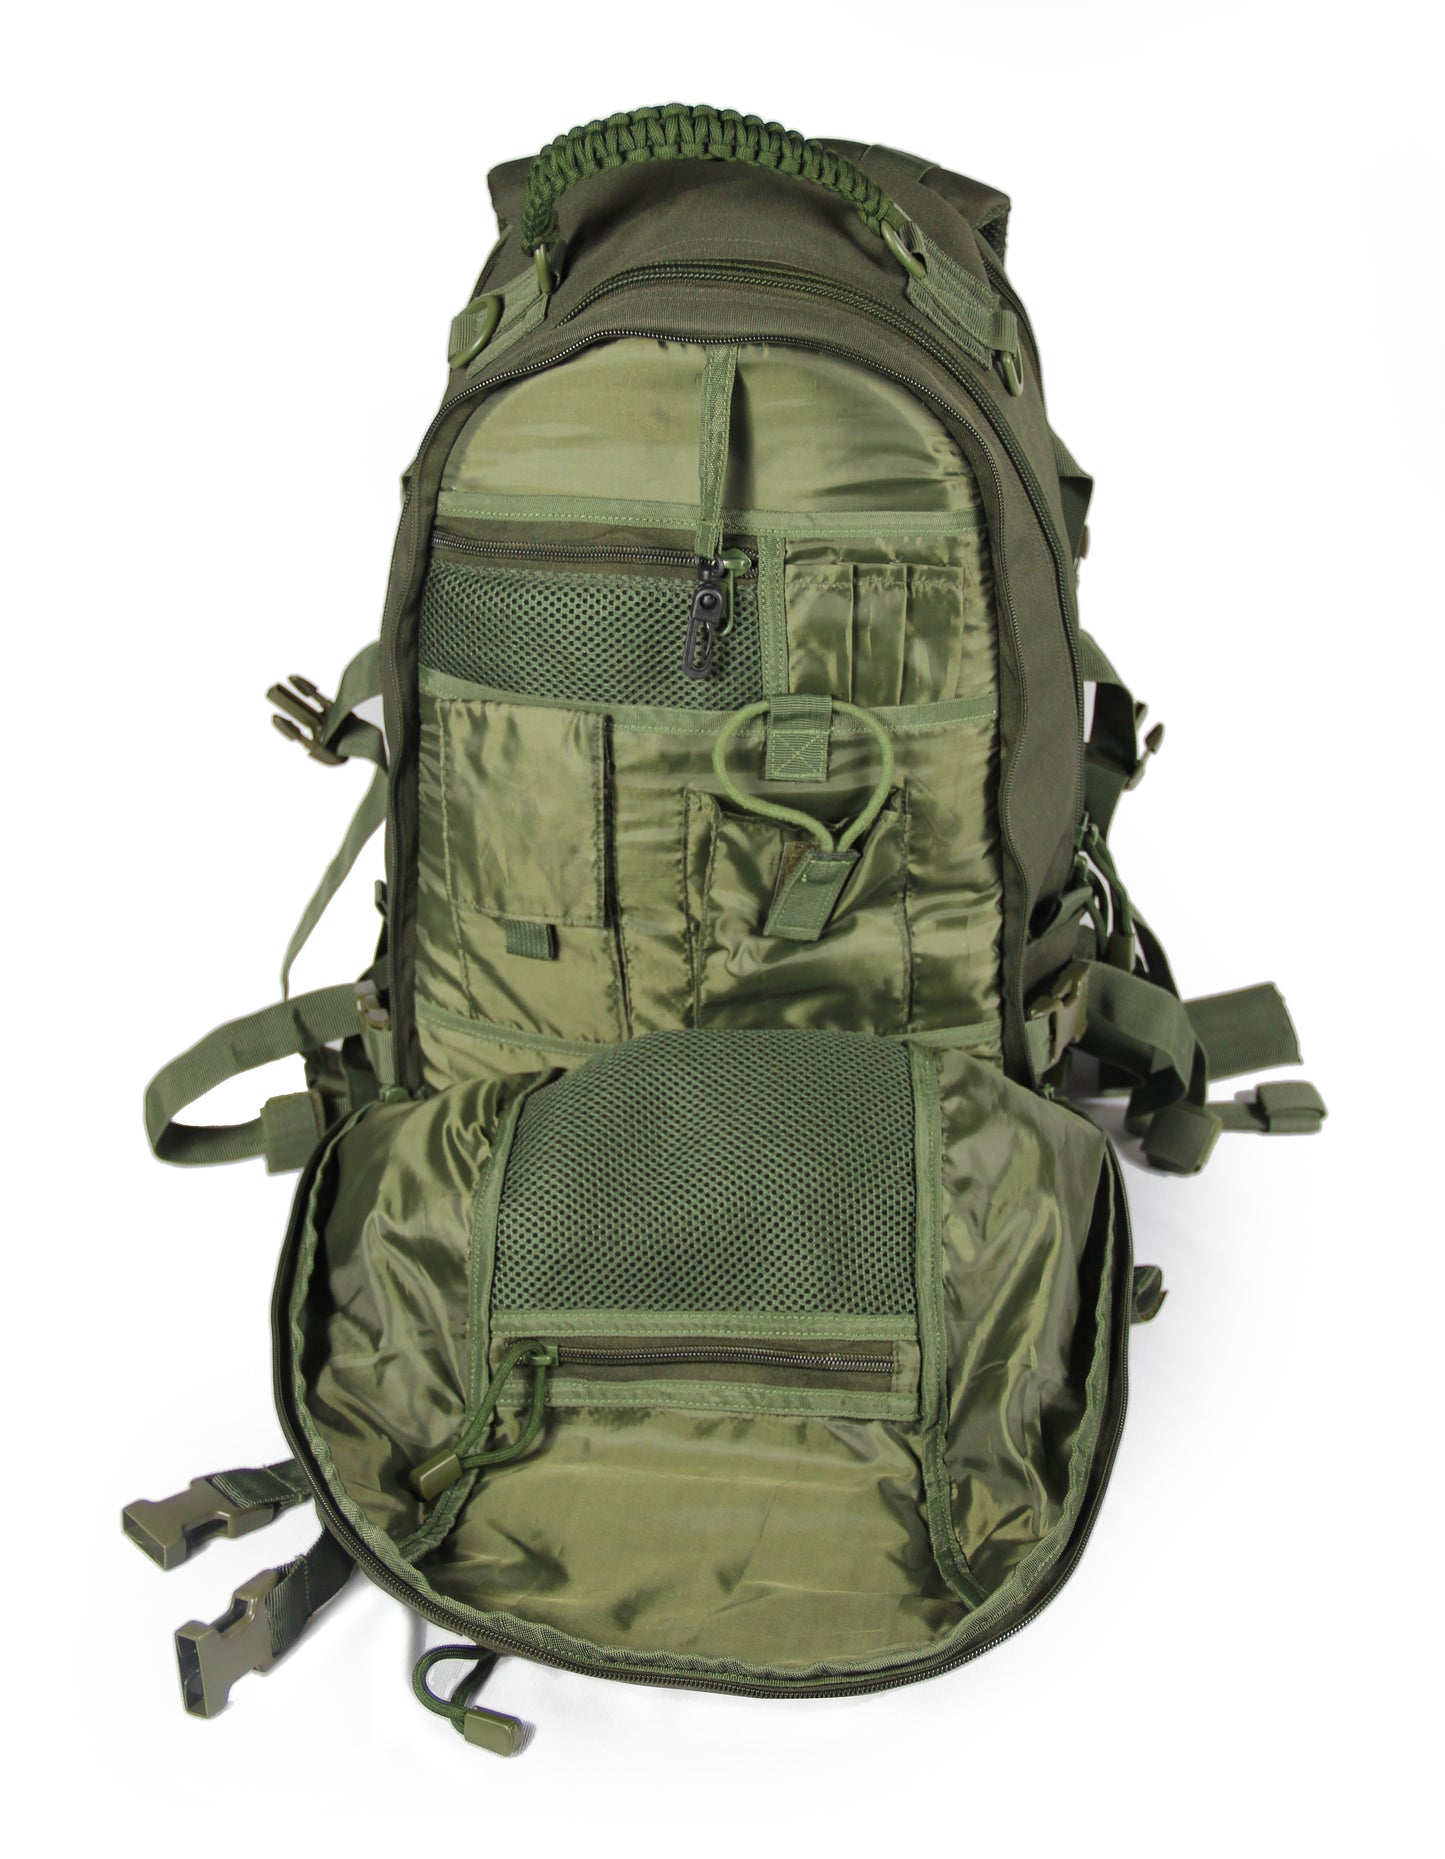 Defence Olive Backpack 40L capacity